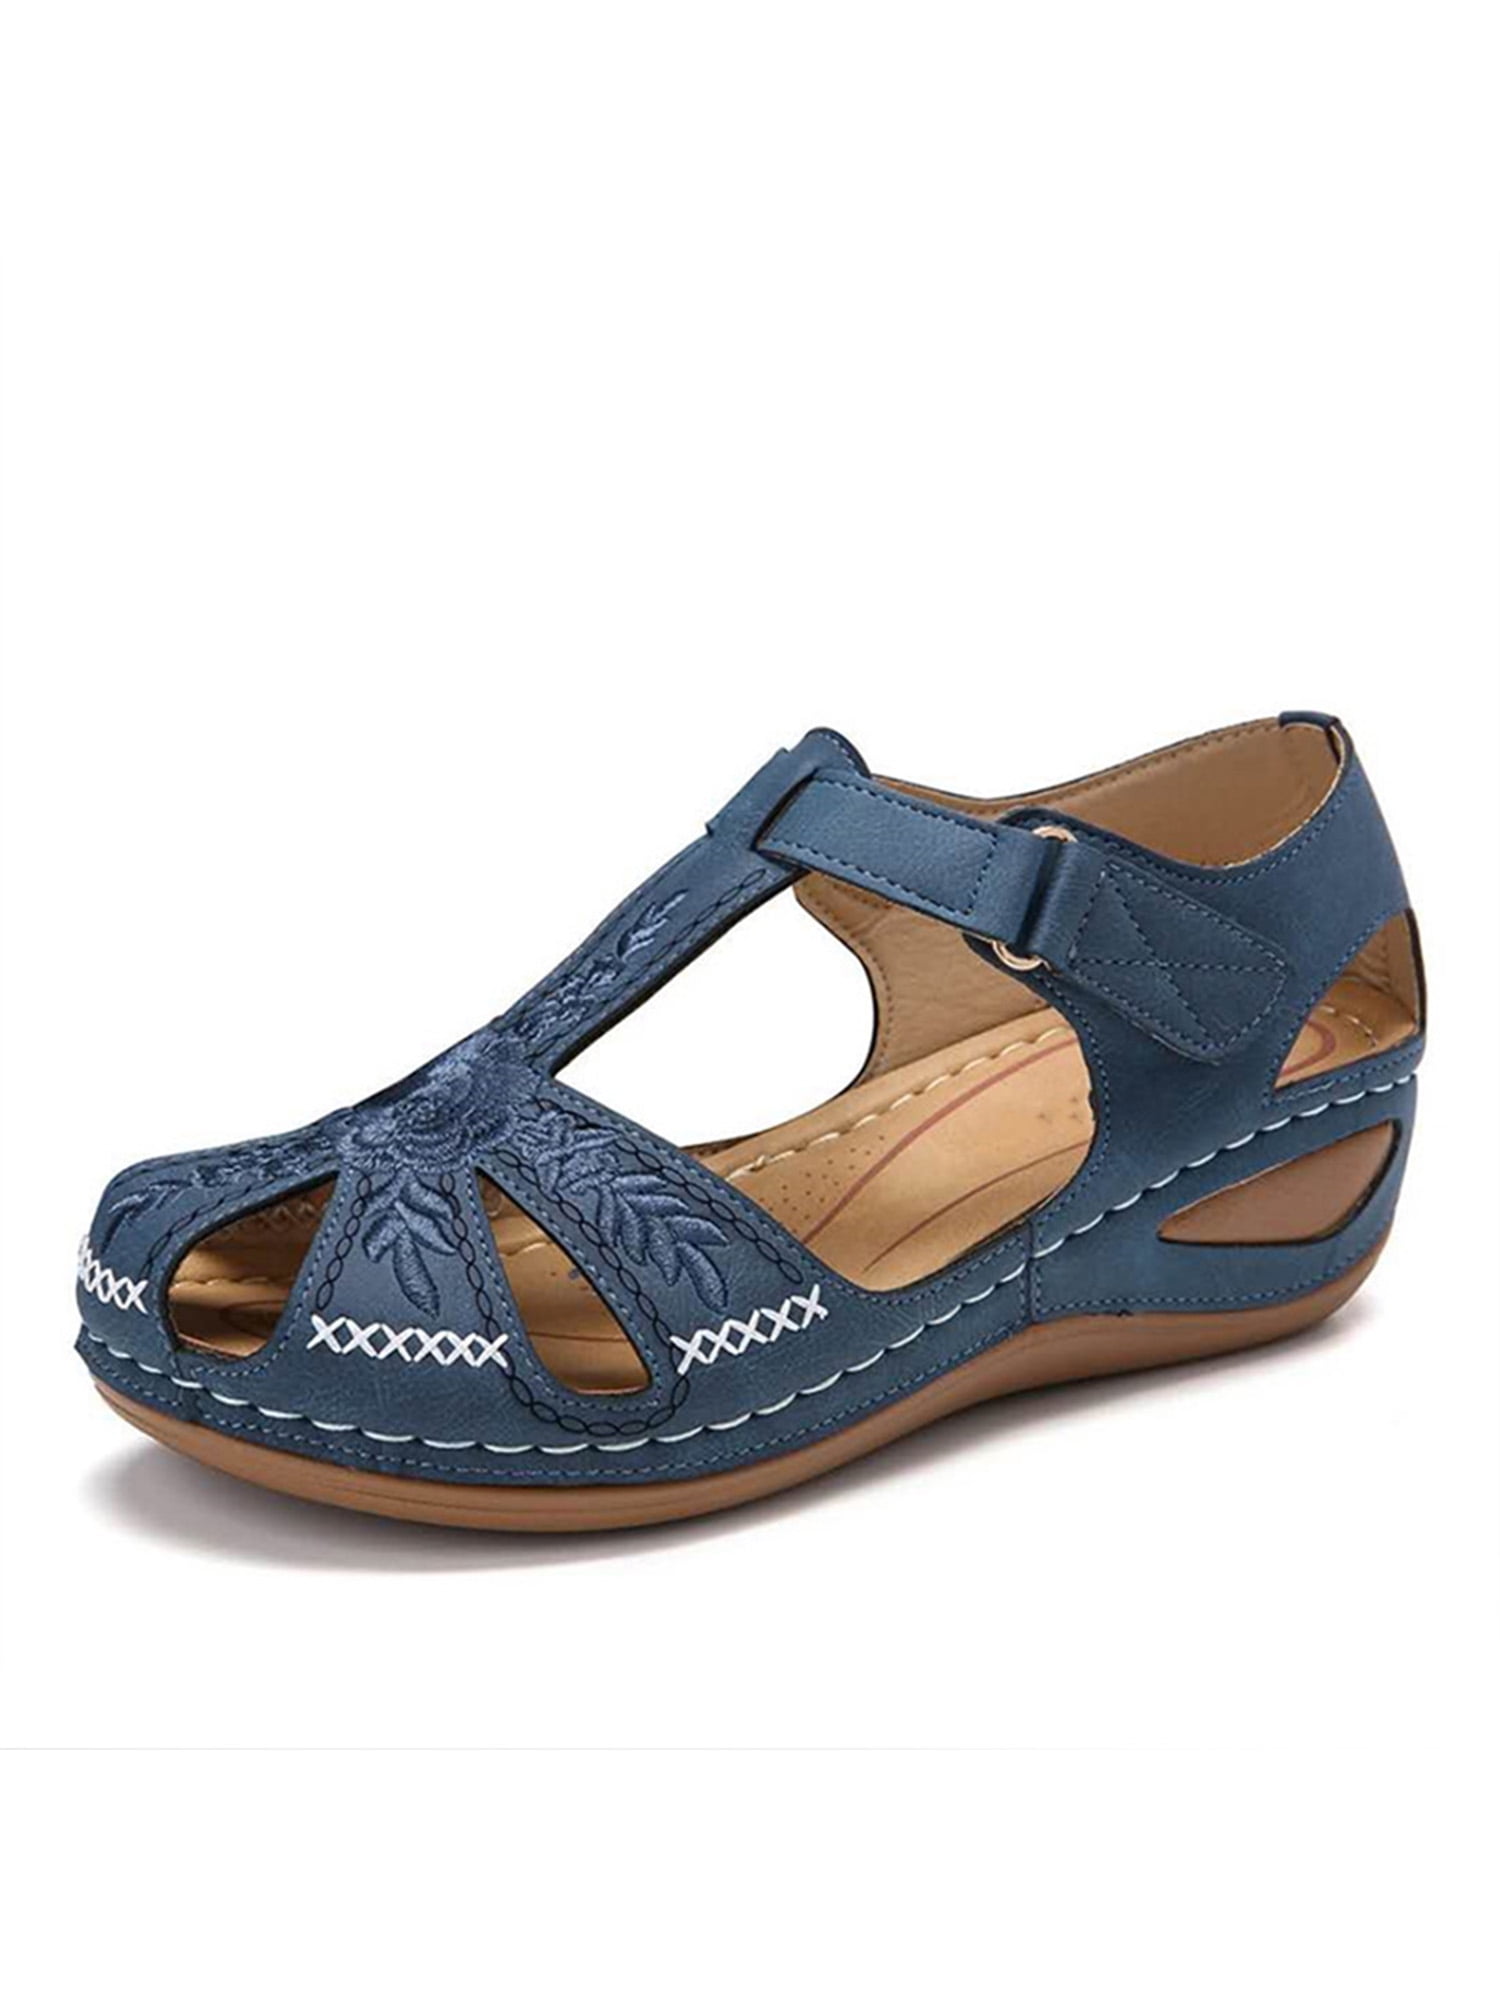 mørkere At håndtere frynser Crocowalk Wedge Sandals for Women Casual Summer Dress Closed Toe Shoes -  Walmart.com